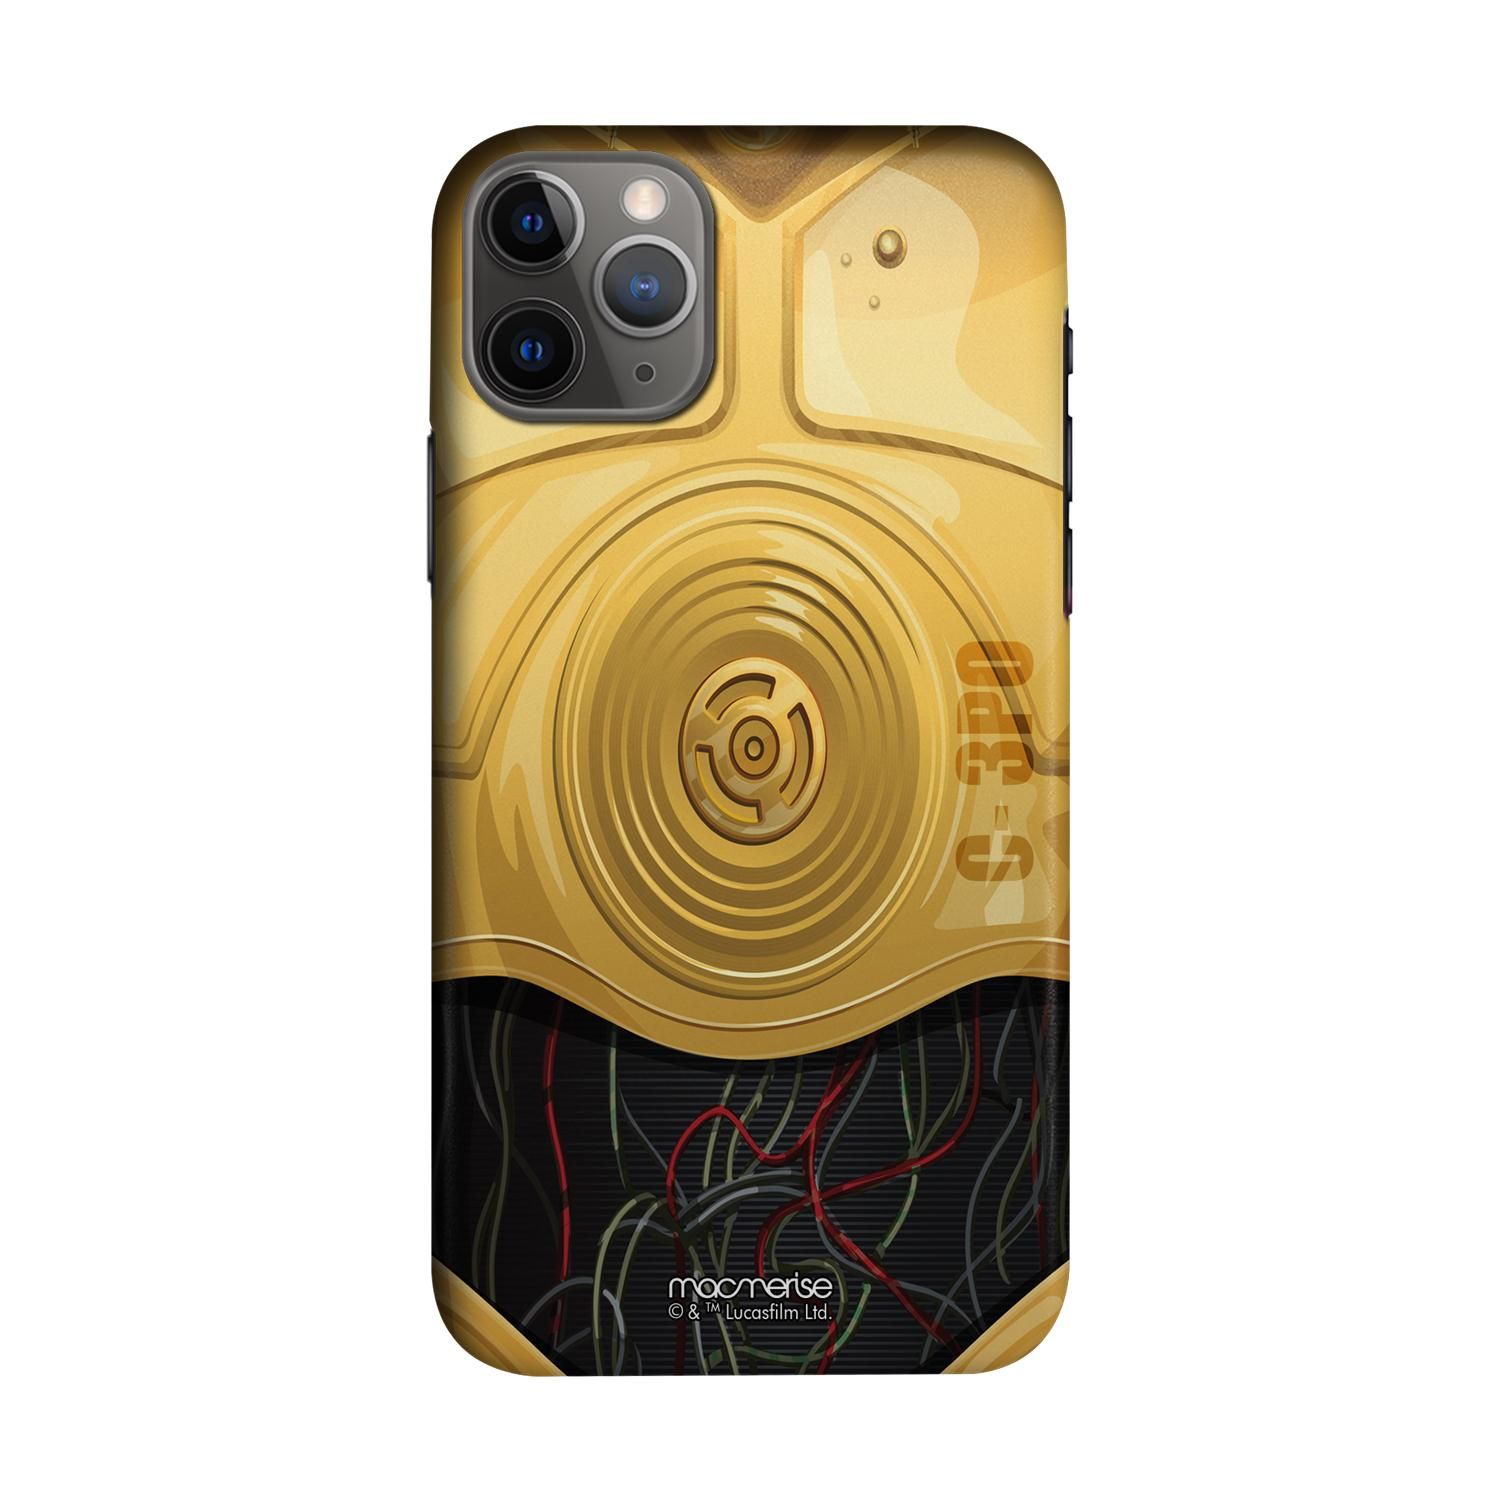 Buy Attire C3PO - Sleek Phone Case for iPhone 11 Pro Max Online